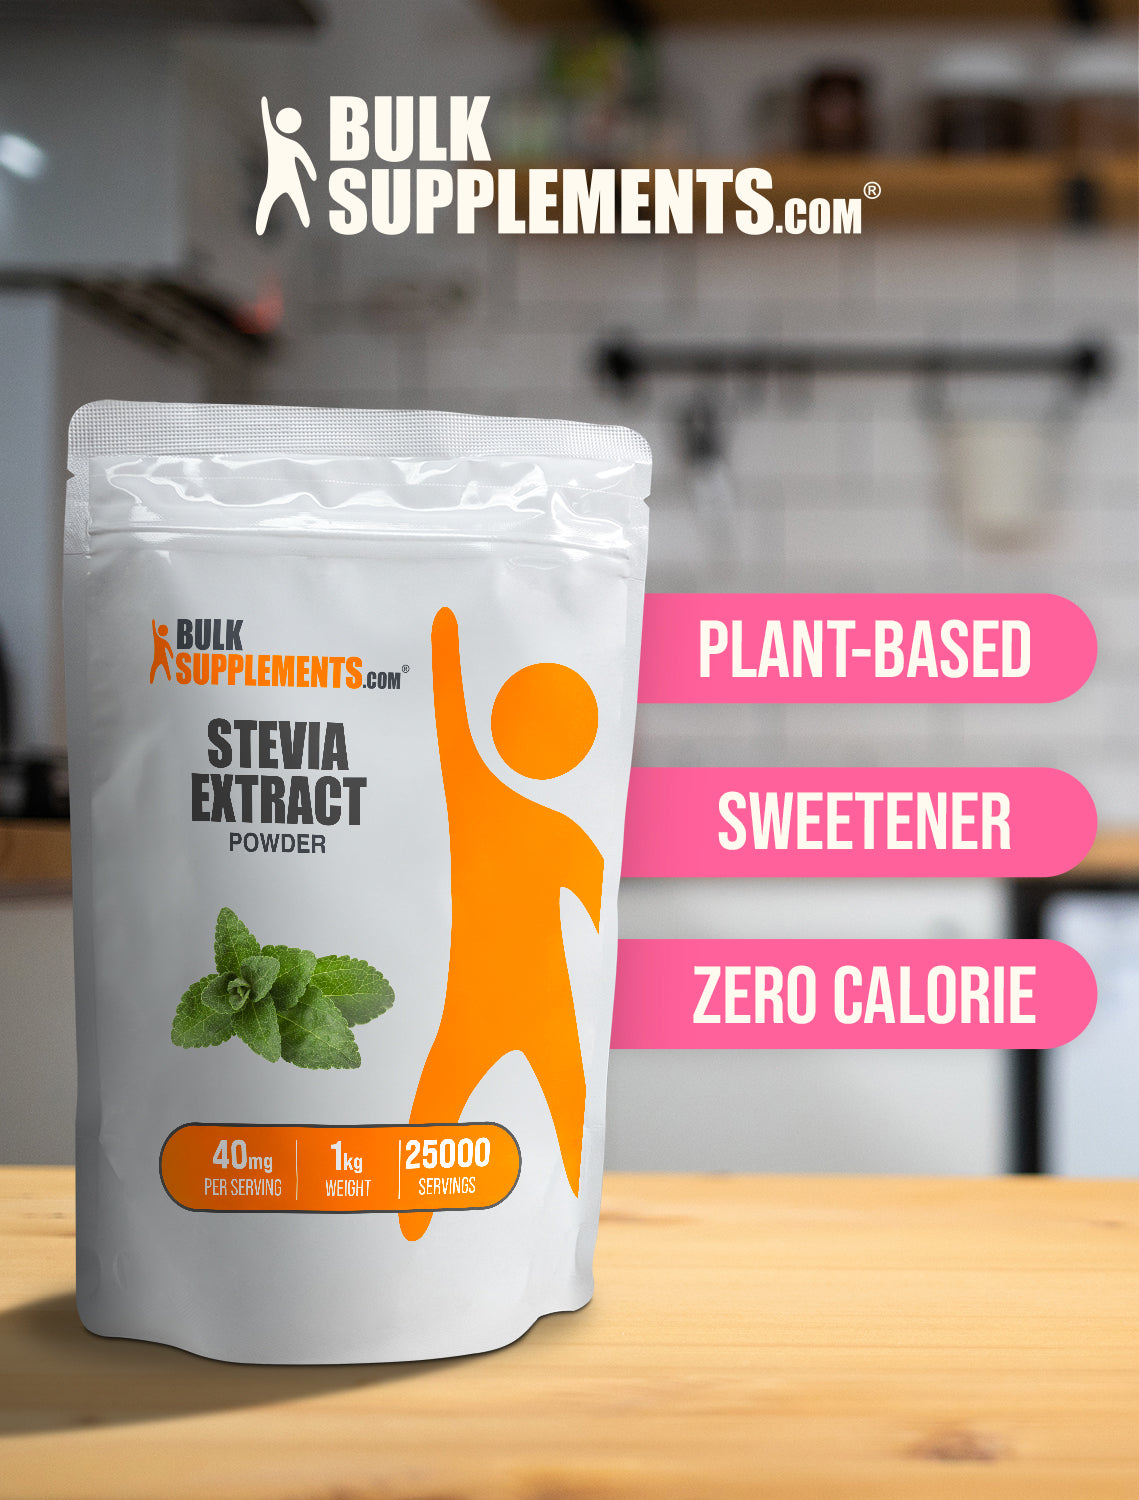 Stevia extract powder keyword image 1kg